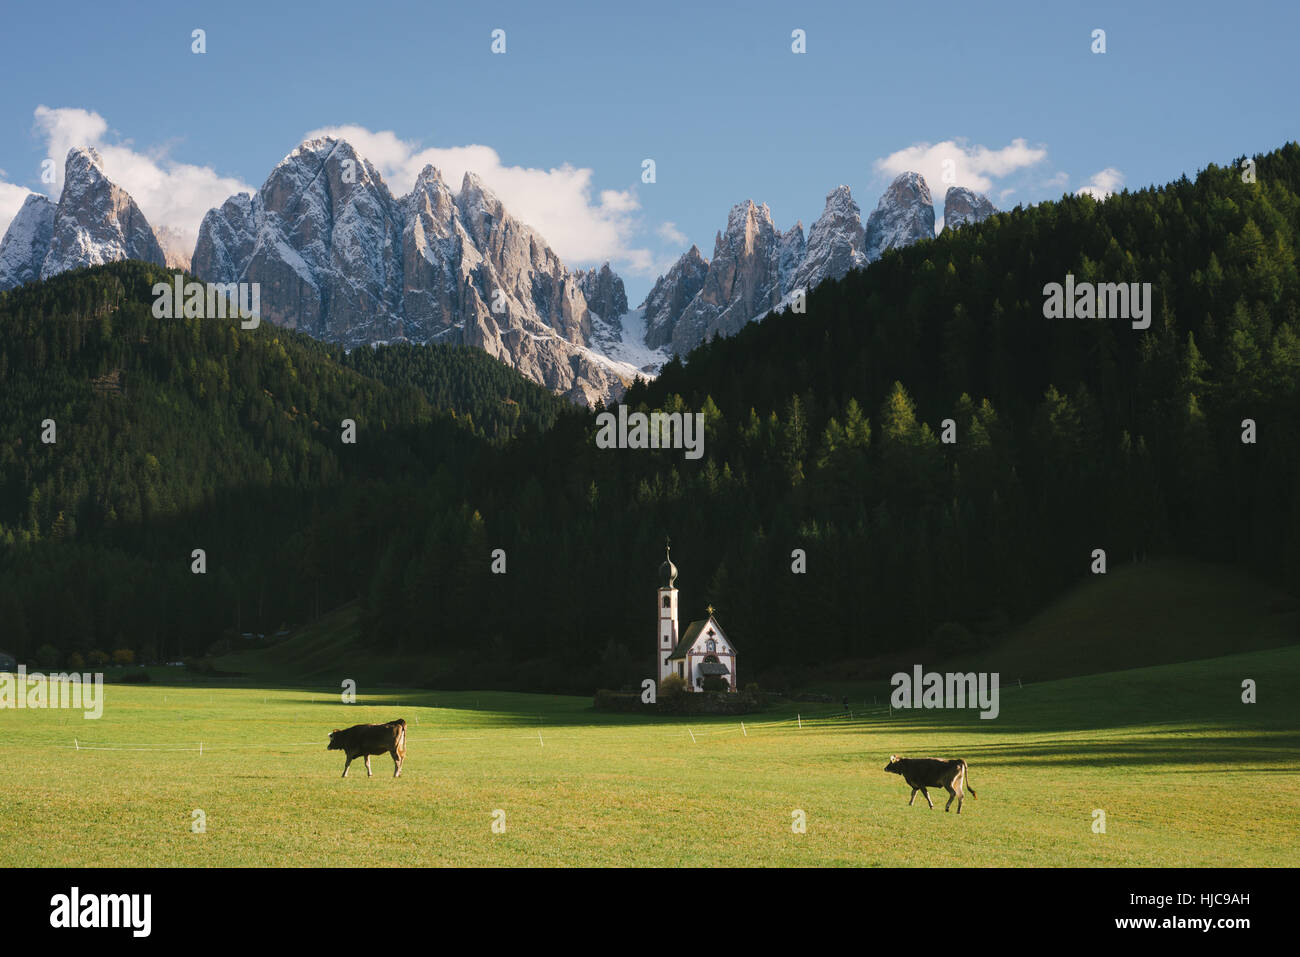 Cows grazing, Santa Maddalena, Val di Funes (Funes Valley), Dolomite Alps, Italy Stock Photo